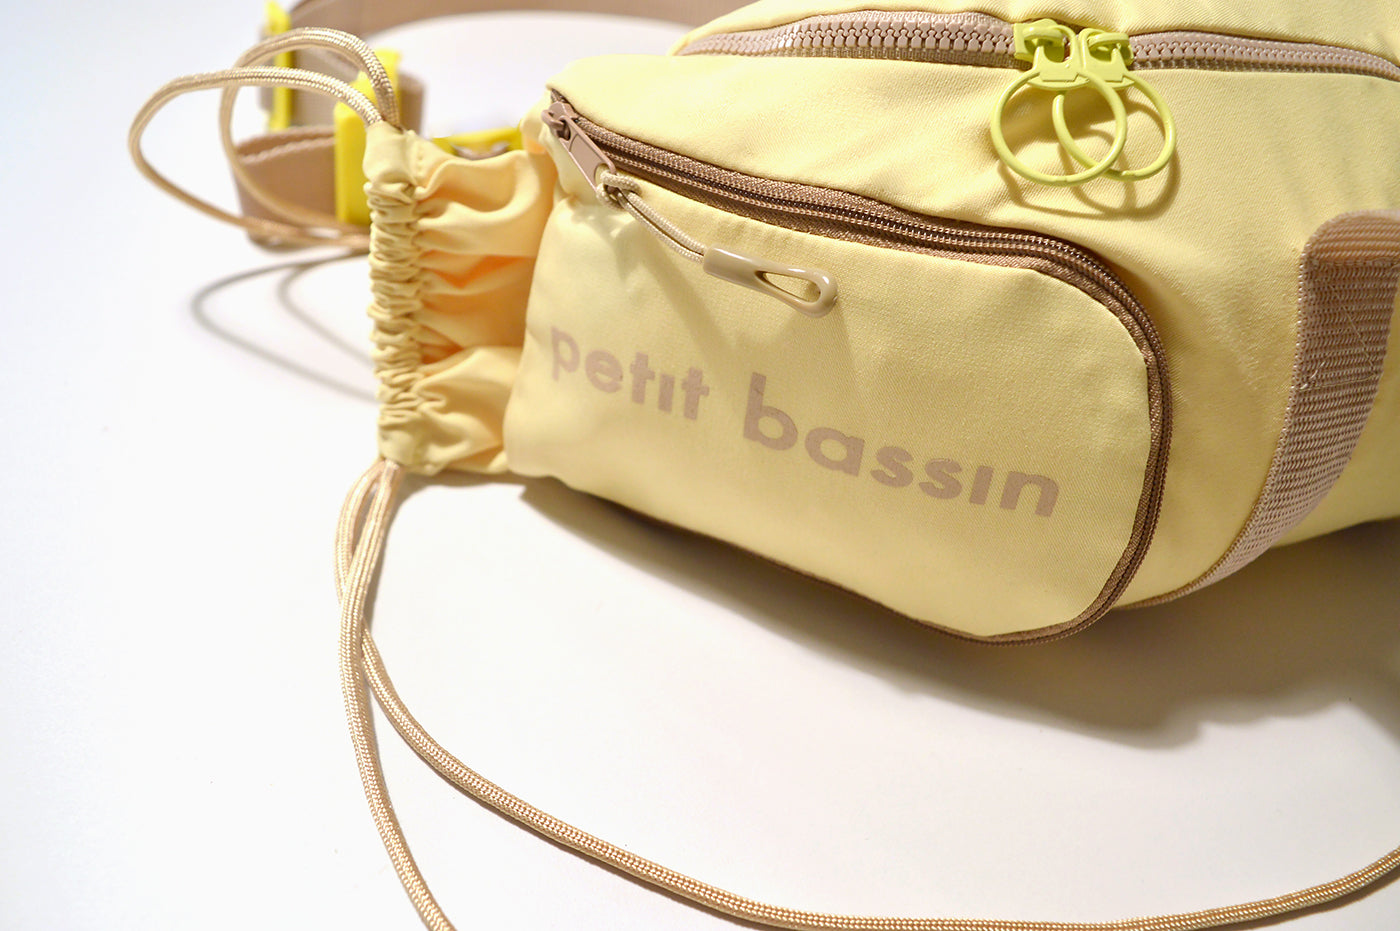 PETIT BASSIN 2 Bag